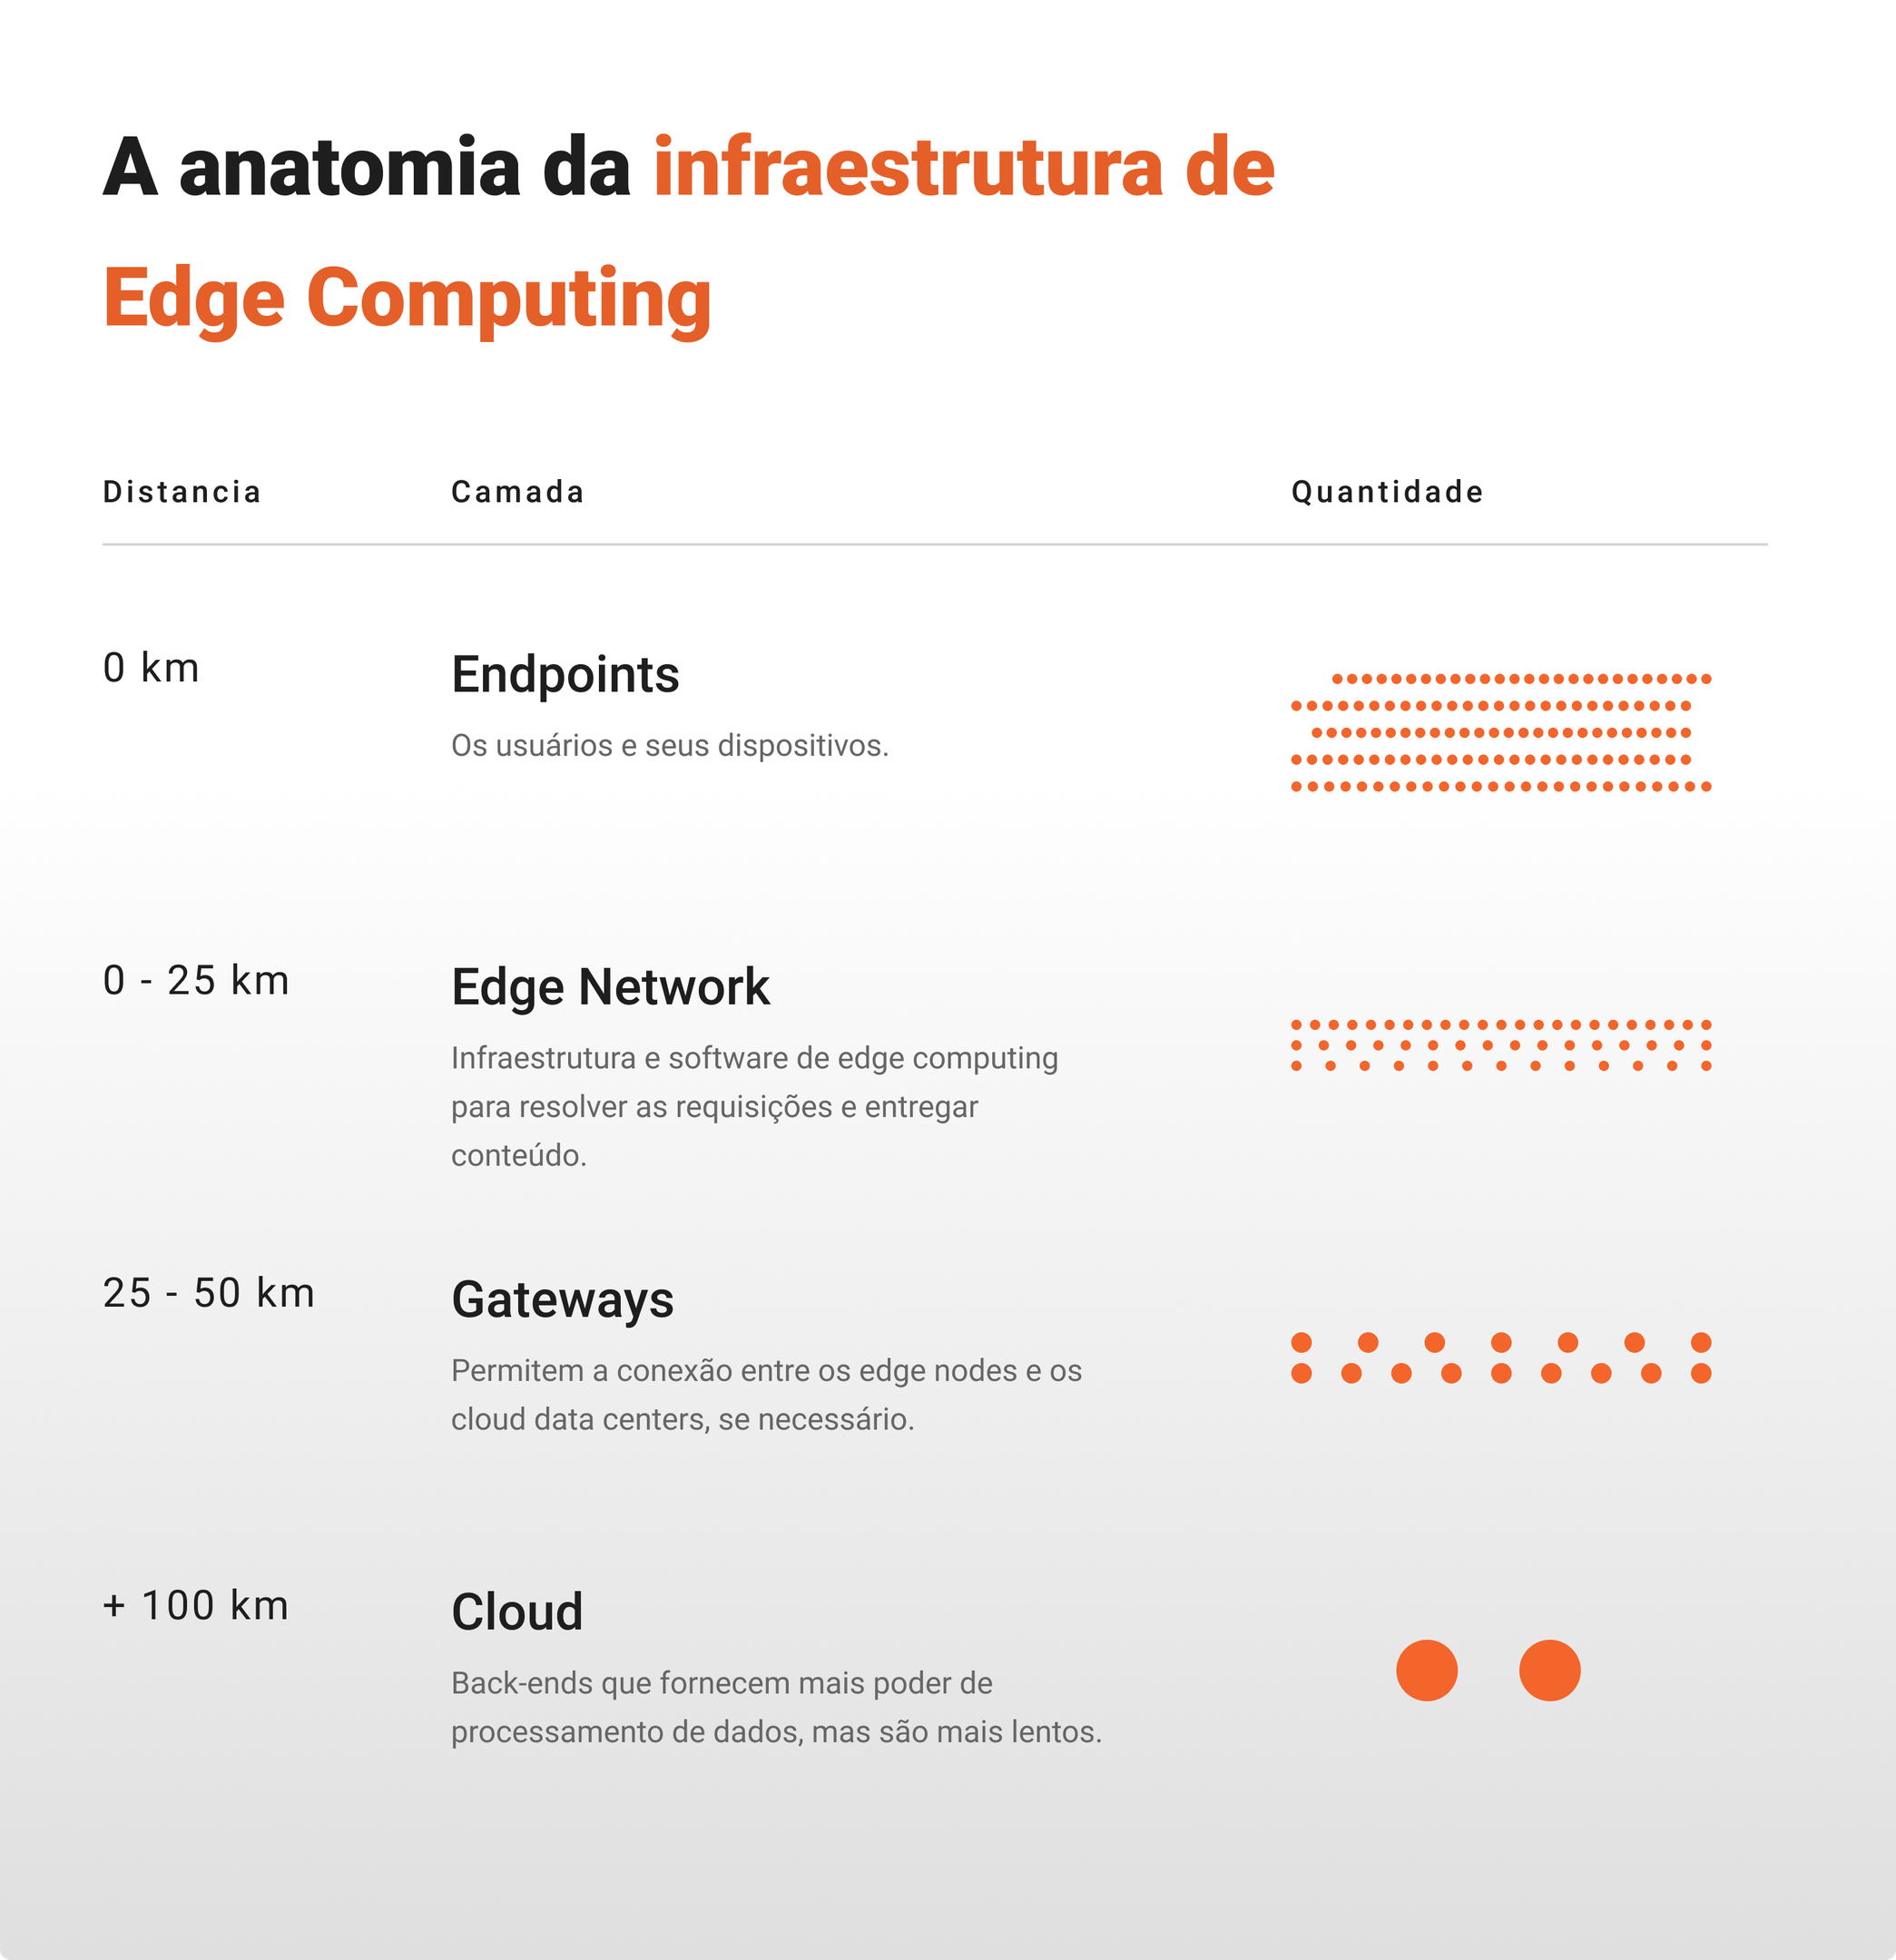 A anatomia da infraestrutura de edge computing